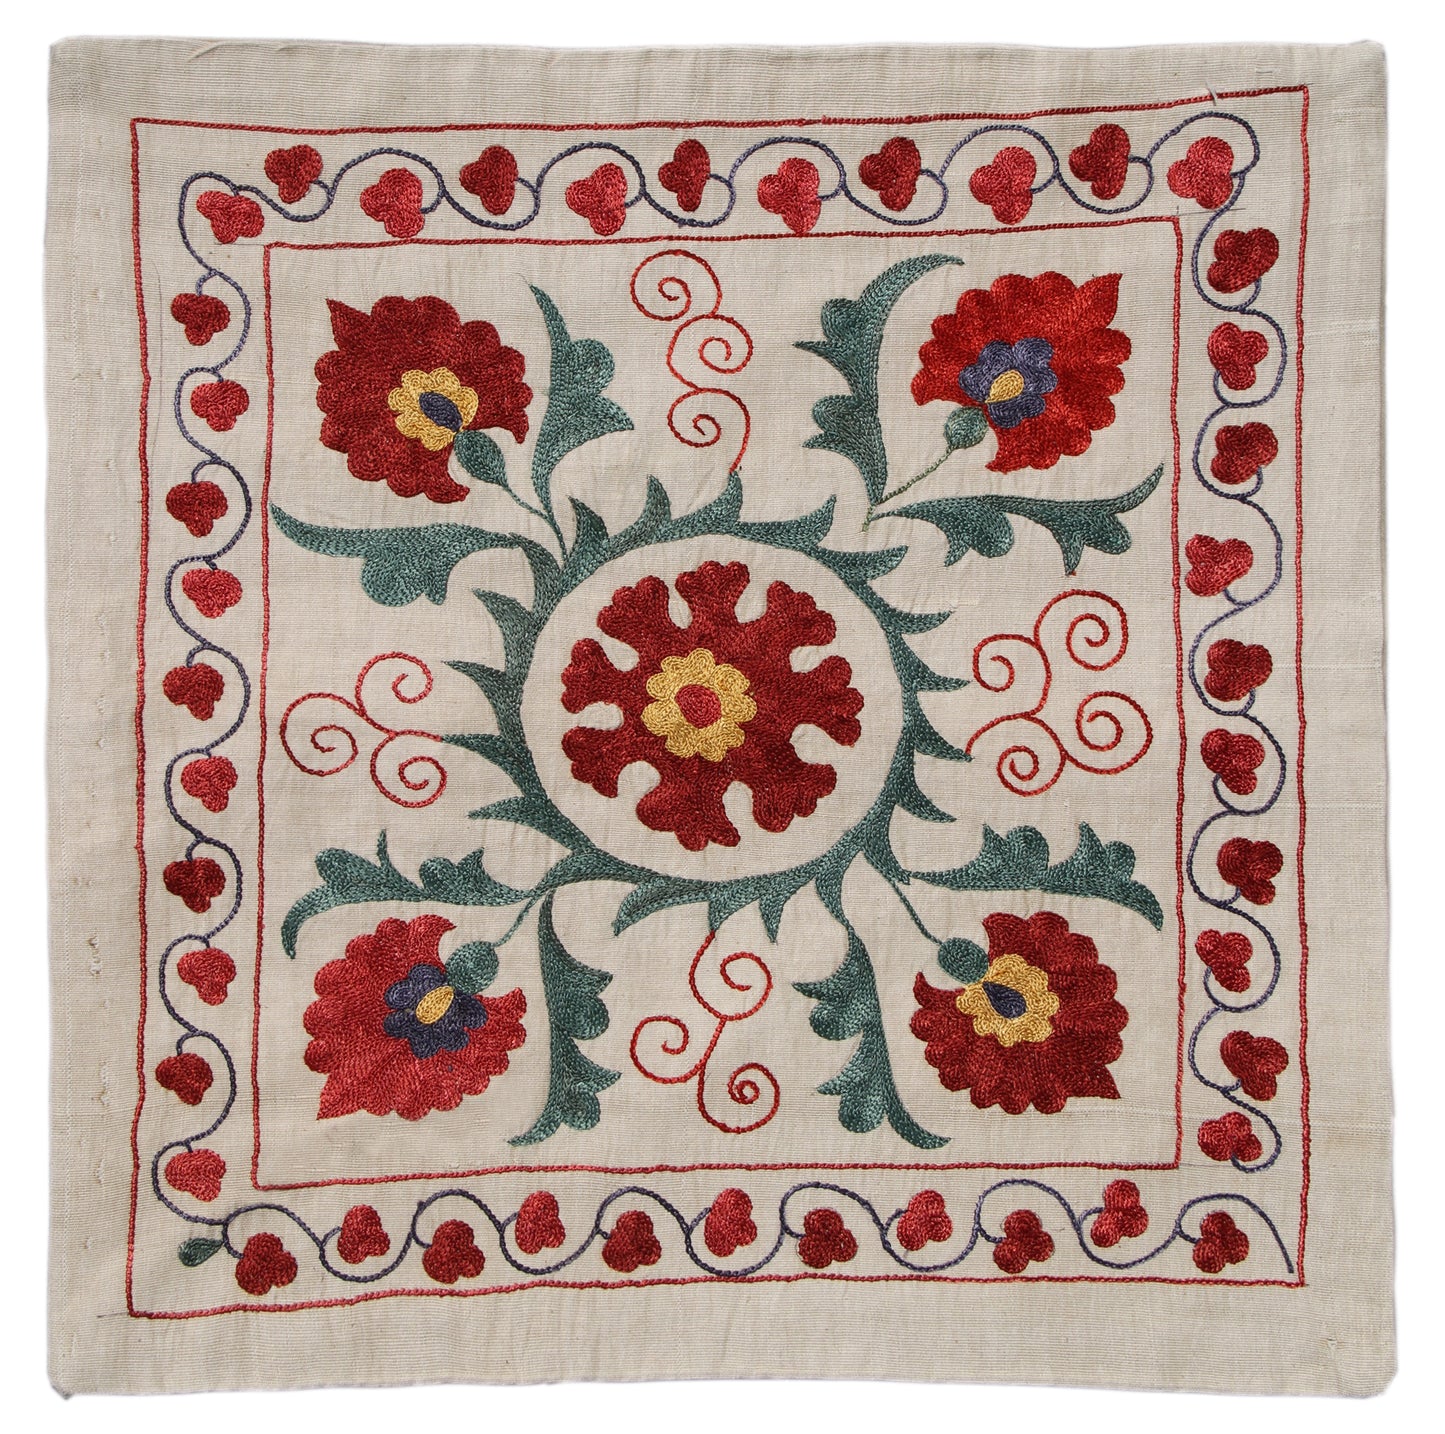 20''x20'' Uzbek Embroidered Pillow